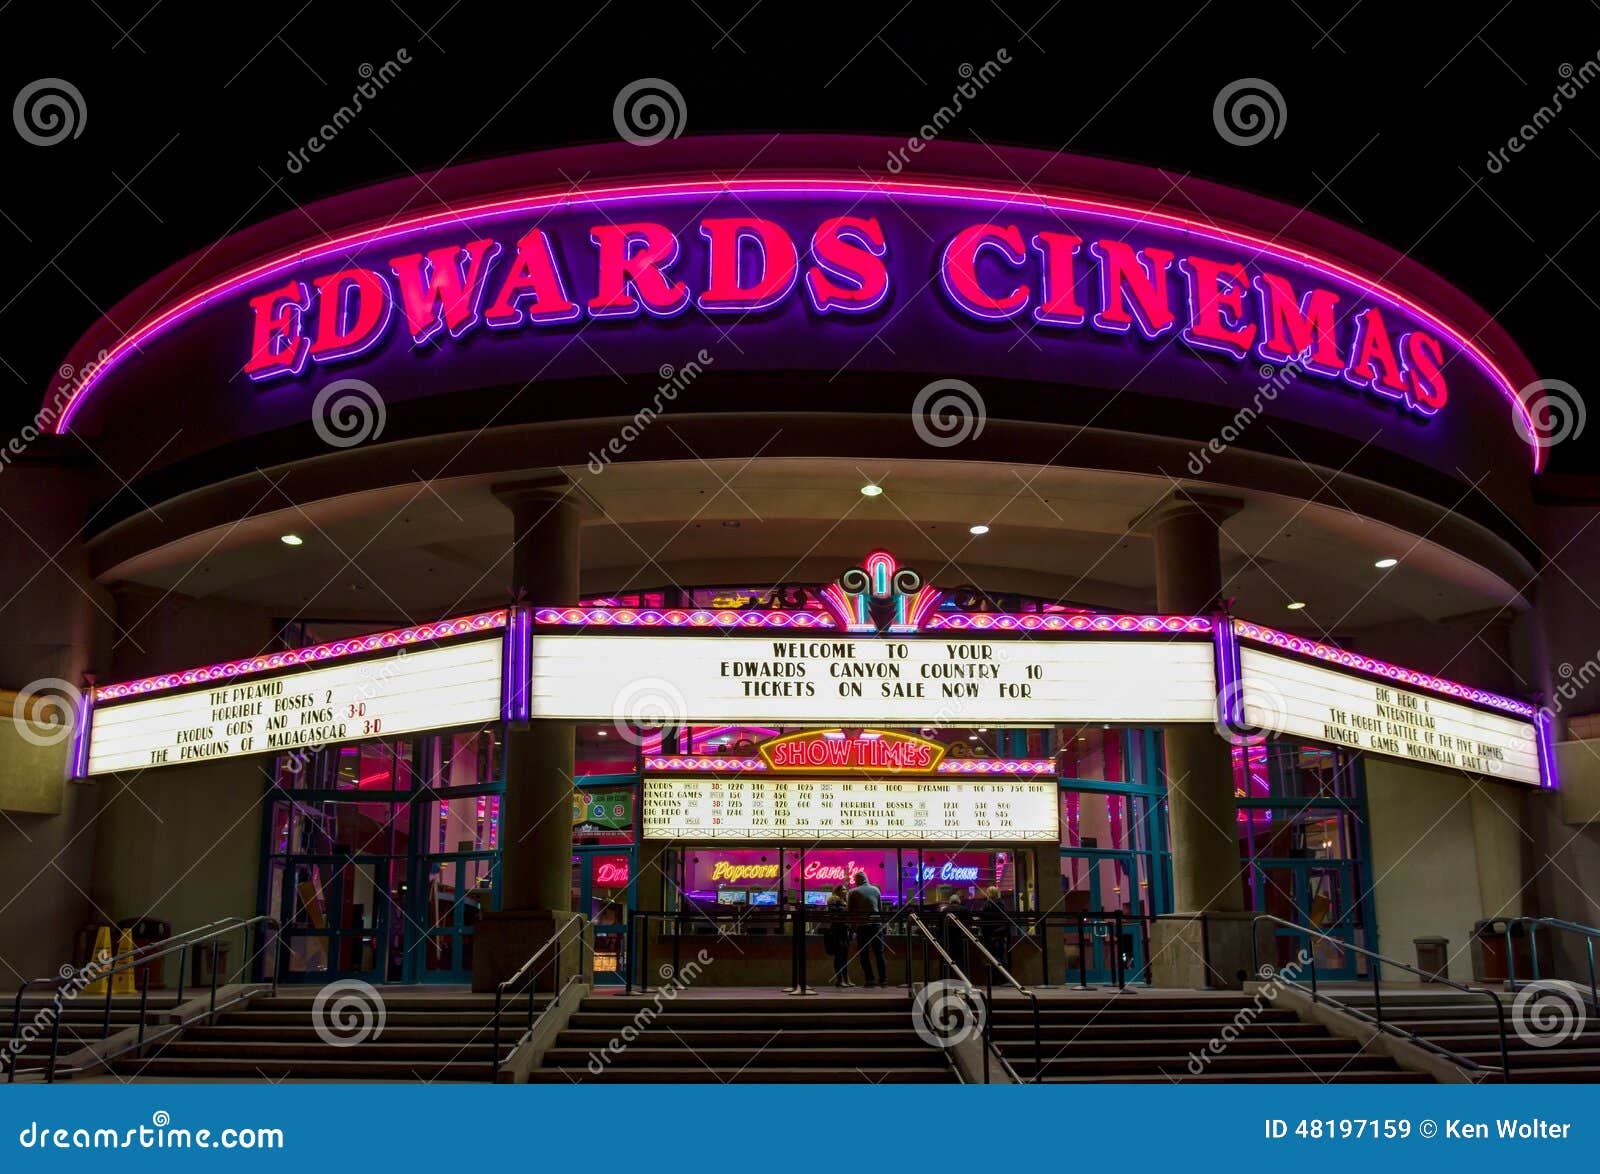 Edwards Cinema Exterior Editorial Stock Image Image Of Nighttime - 48197159